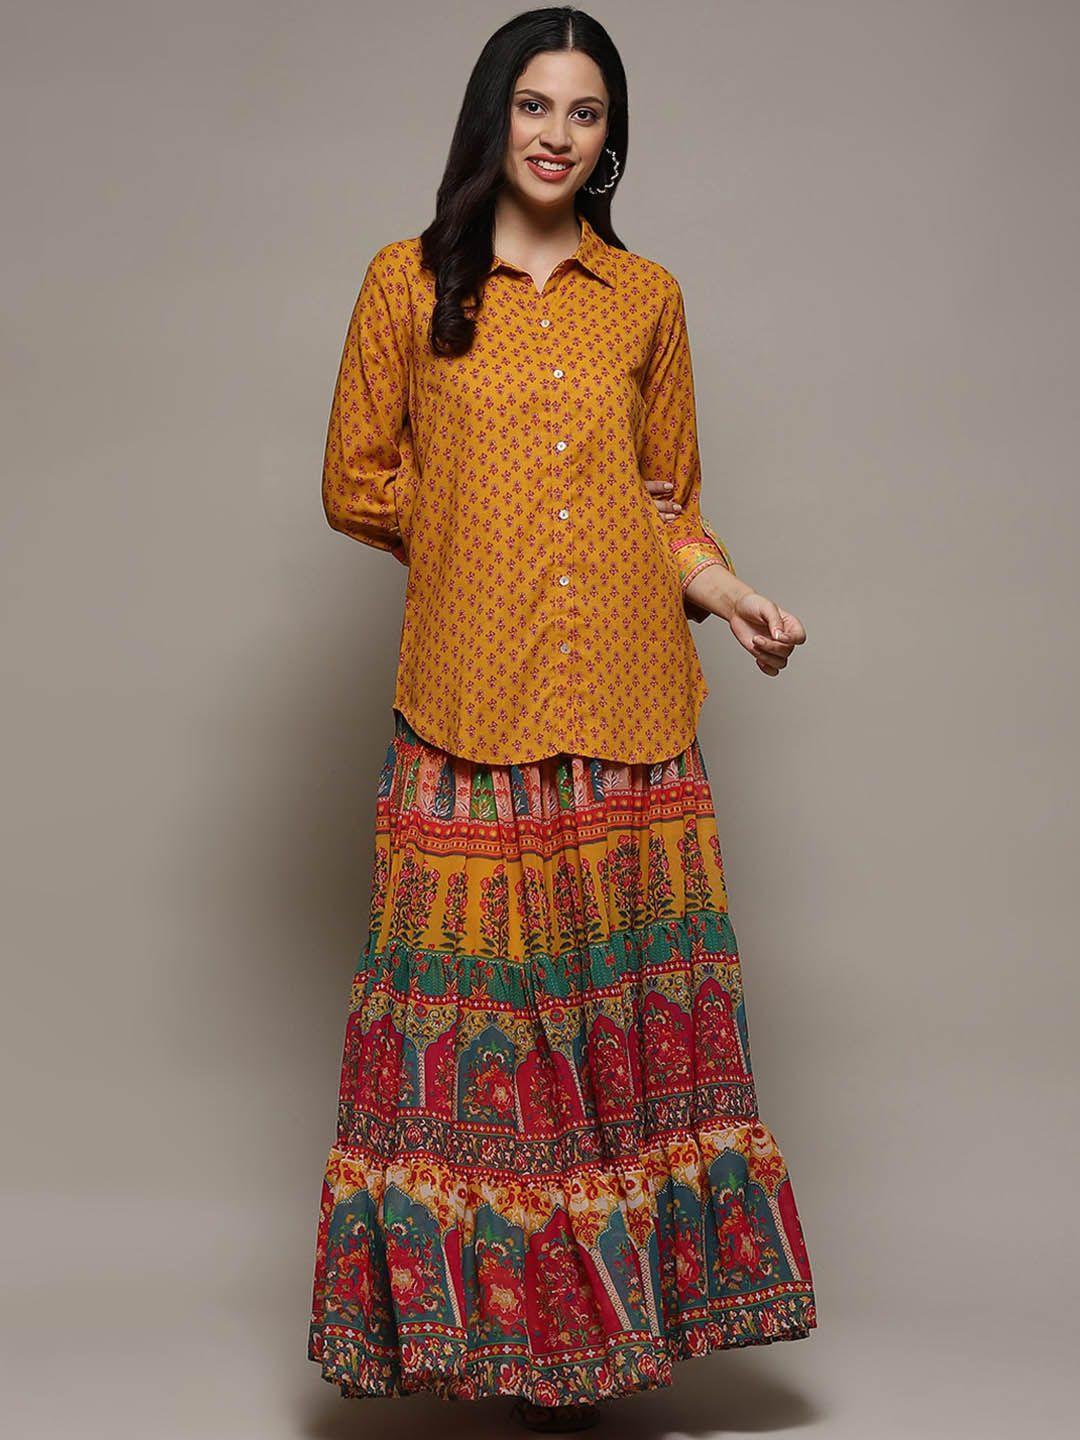 biba floral printed ethnic shirt with skirt